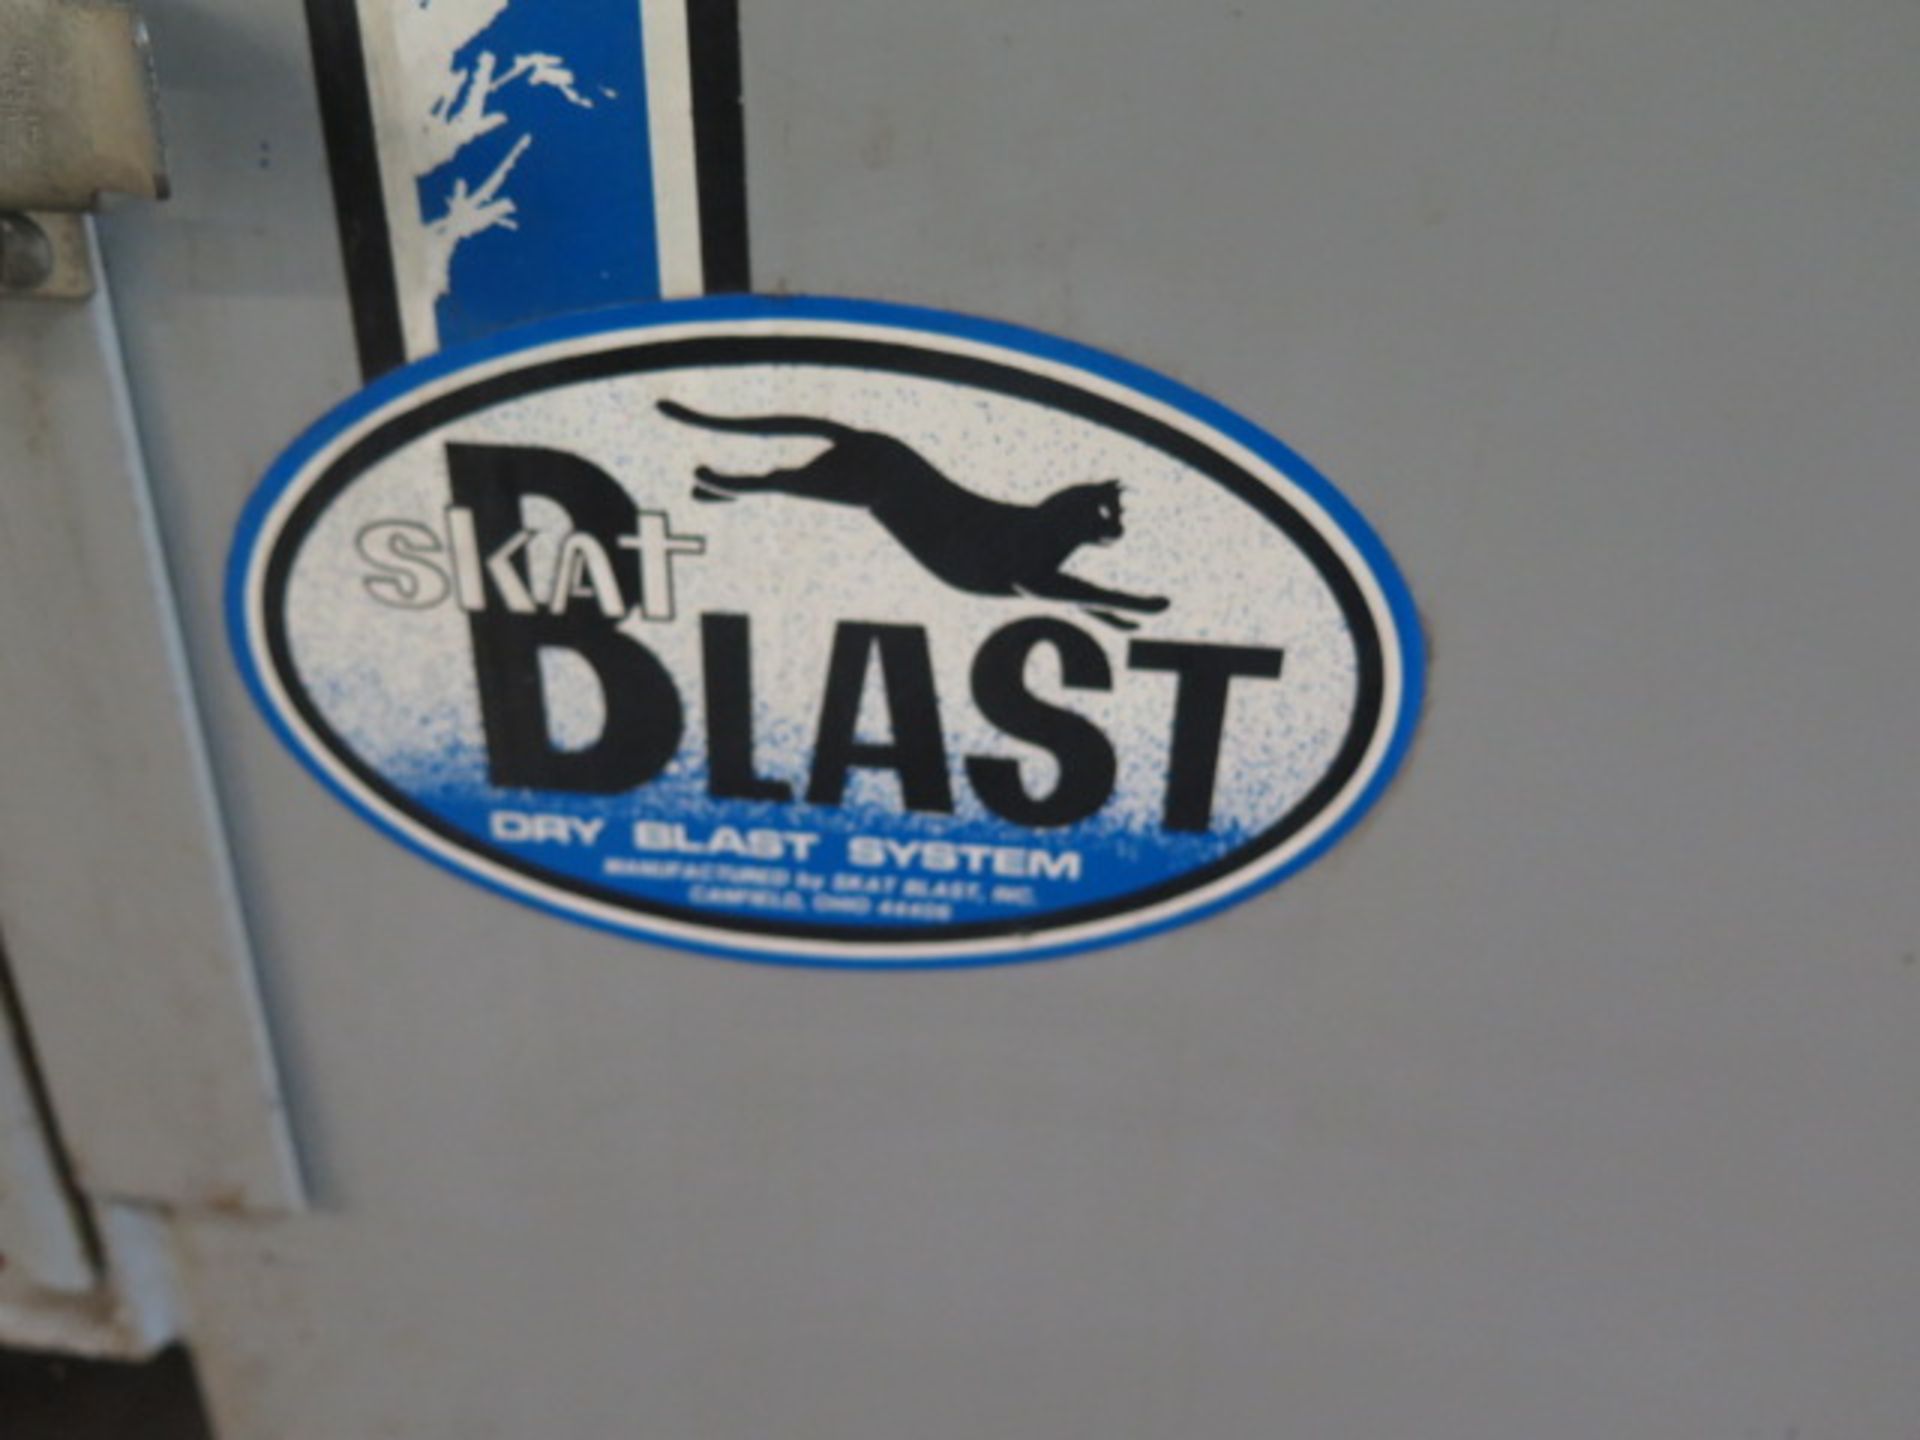 Skat Blast Dry Blast Cabinet s/n 12255 w/ Skat Blast Dust Collection System s/n E019021 - Image 3 of 5